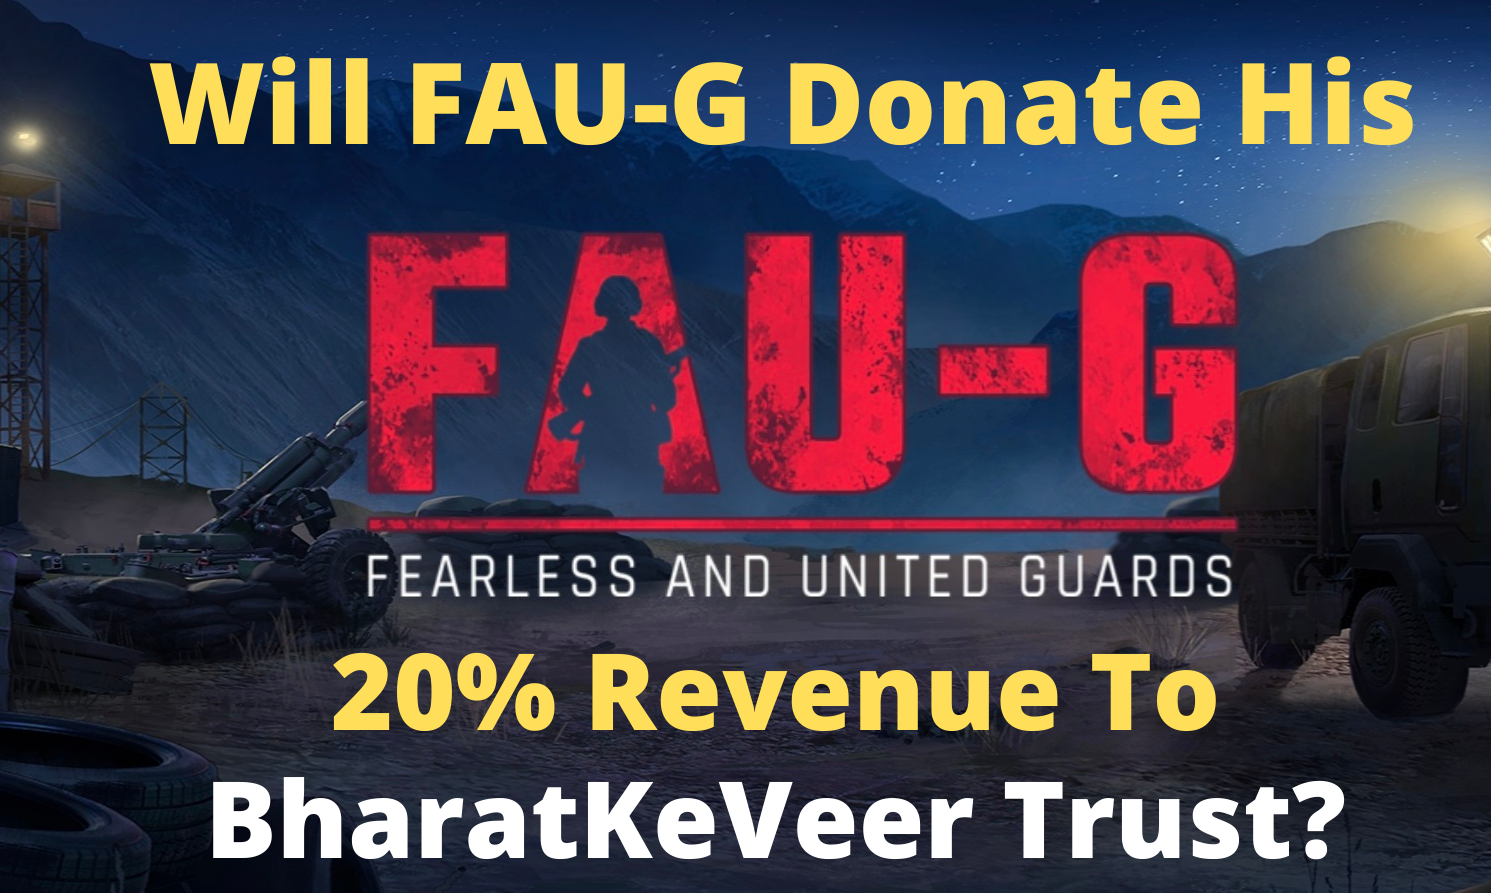 Kya Faug Game Apni Income mese 20% Army Ko Donate Kregi